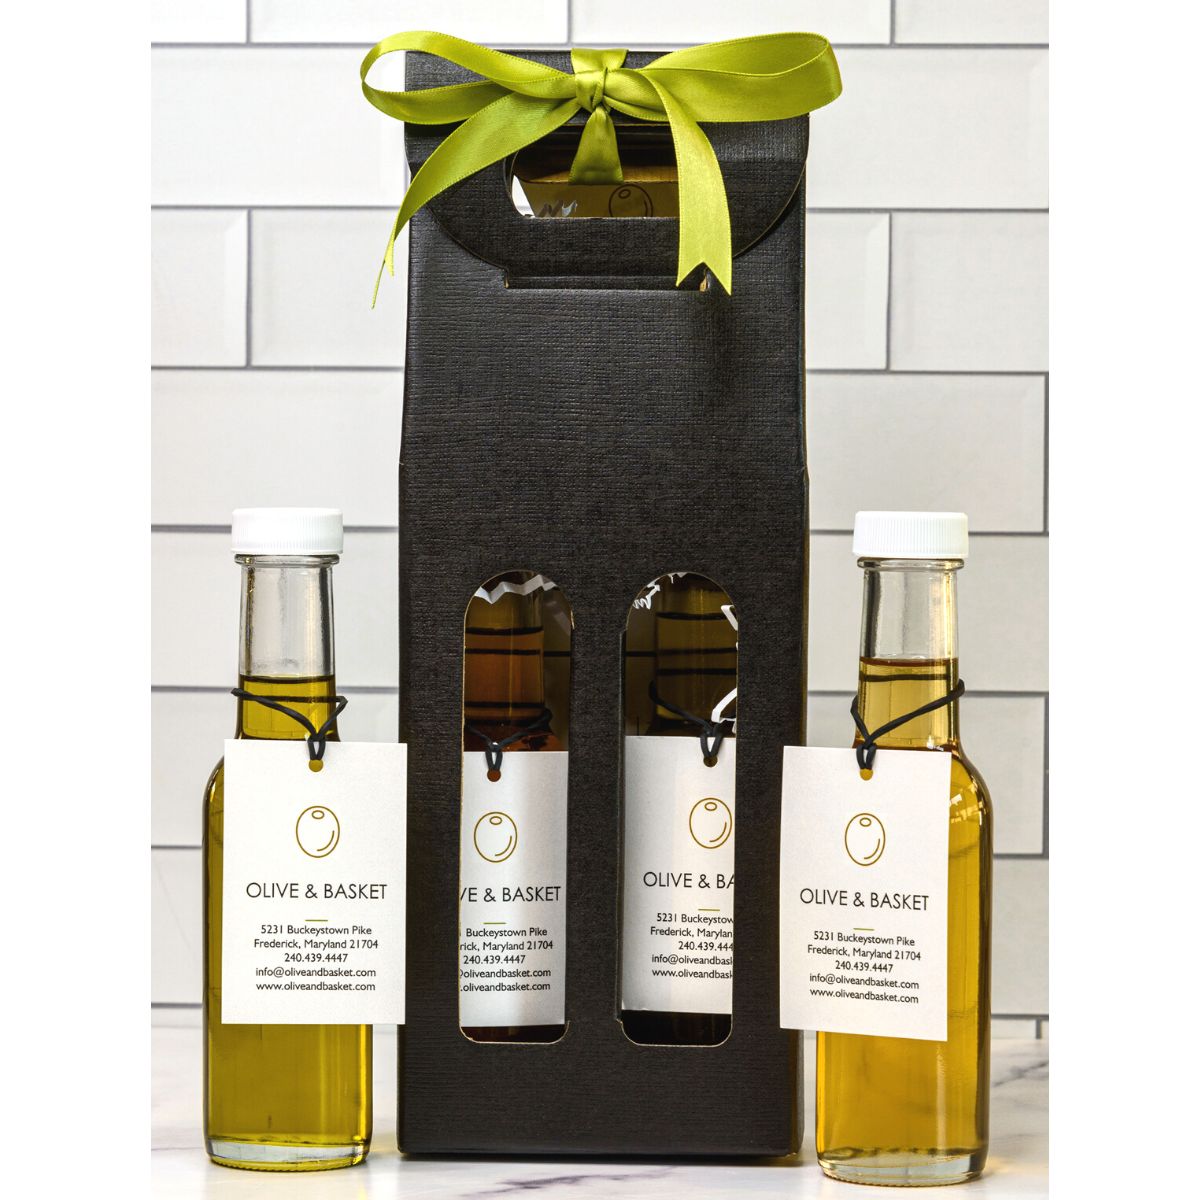 Greek Island-Inspired Duo Gift Set- Lemon Cucumber White Balsamic Vinegar and Greek Seasoning Olive Oil in a Gift Box